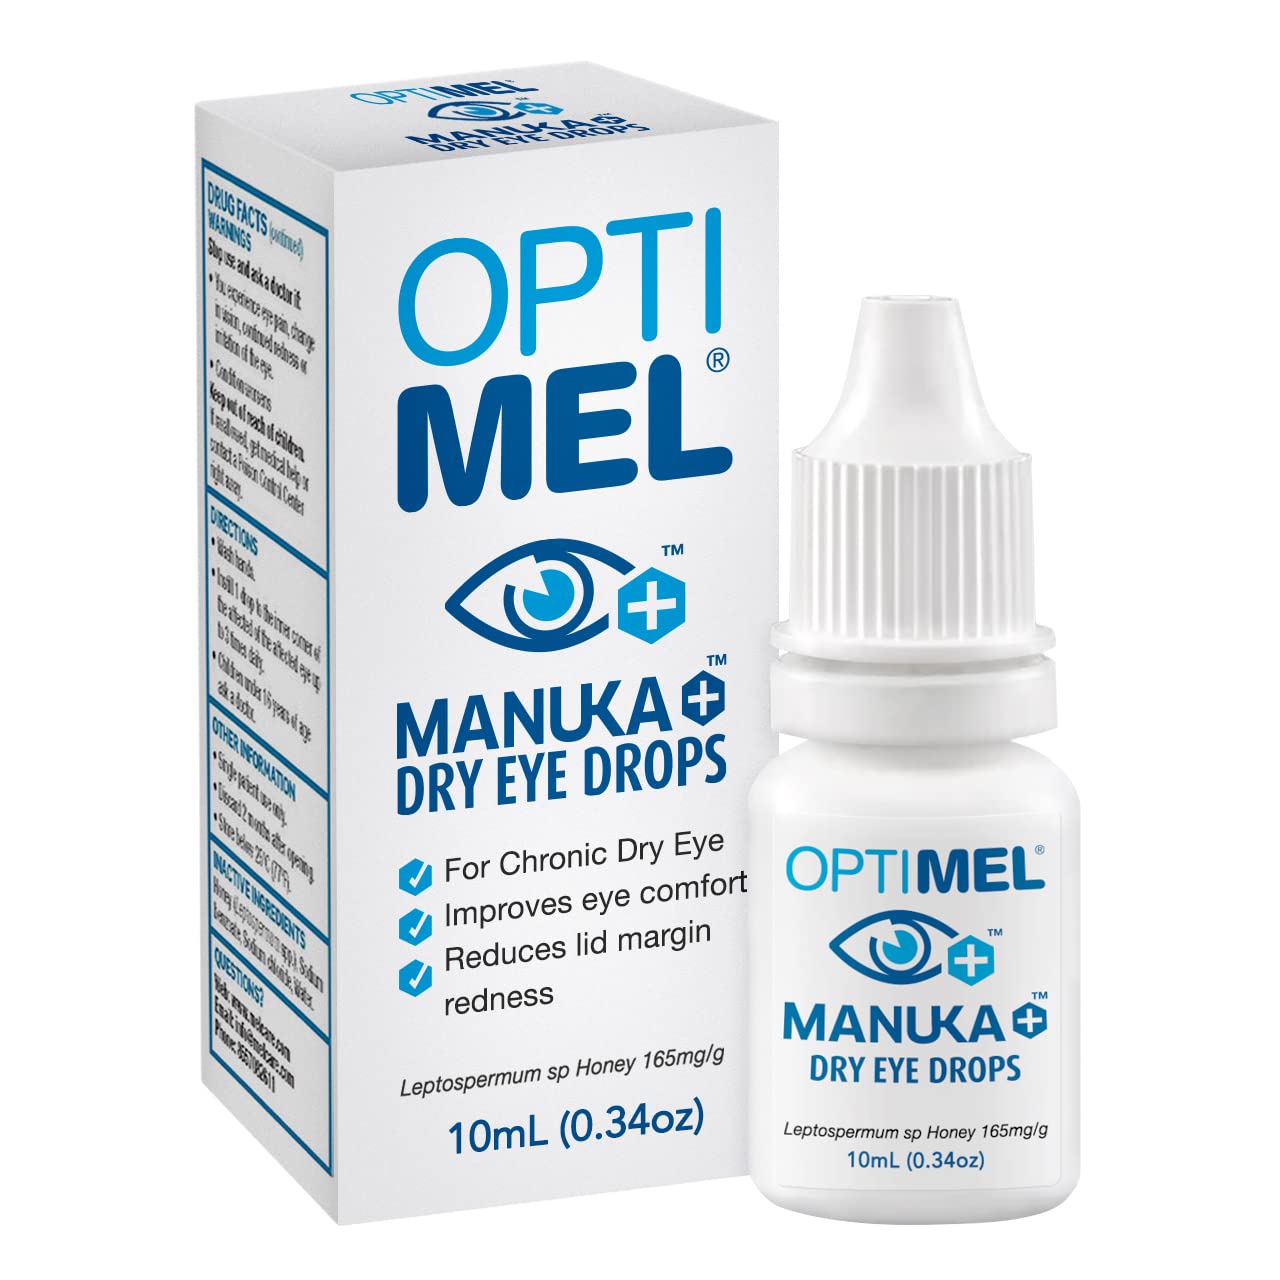 Optimel Manuka+ Dry Eye Drops